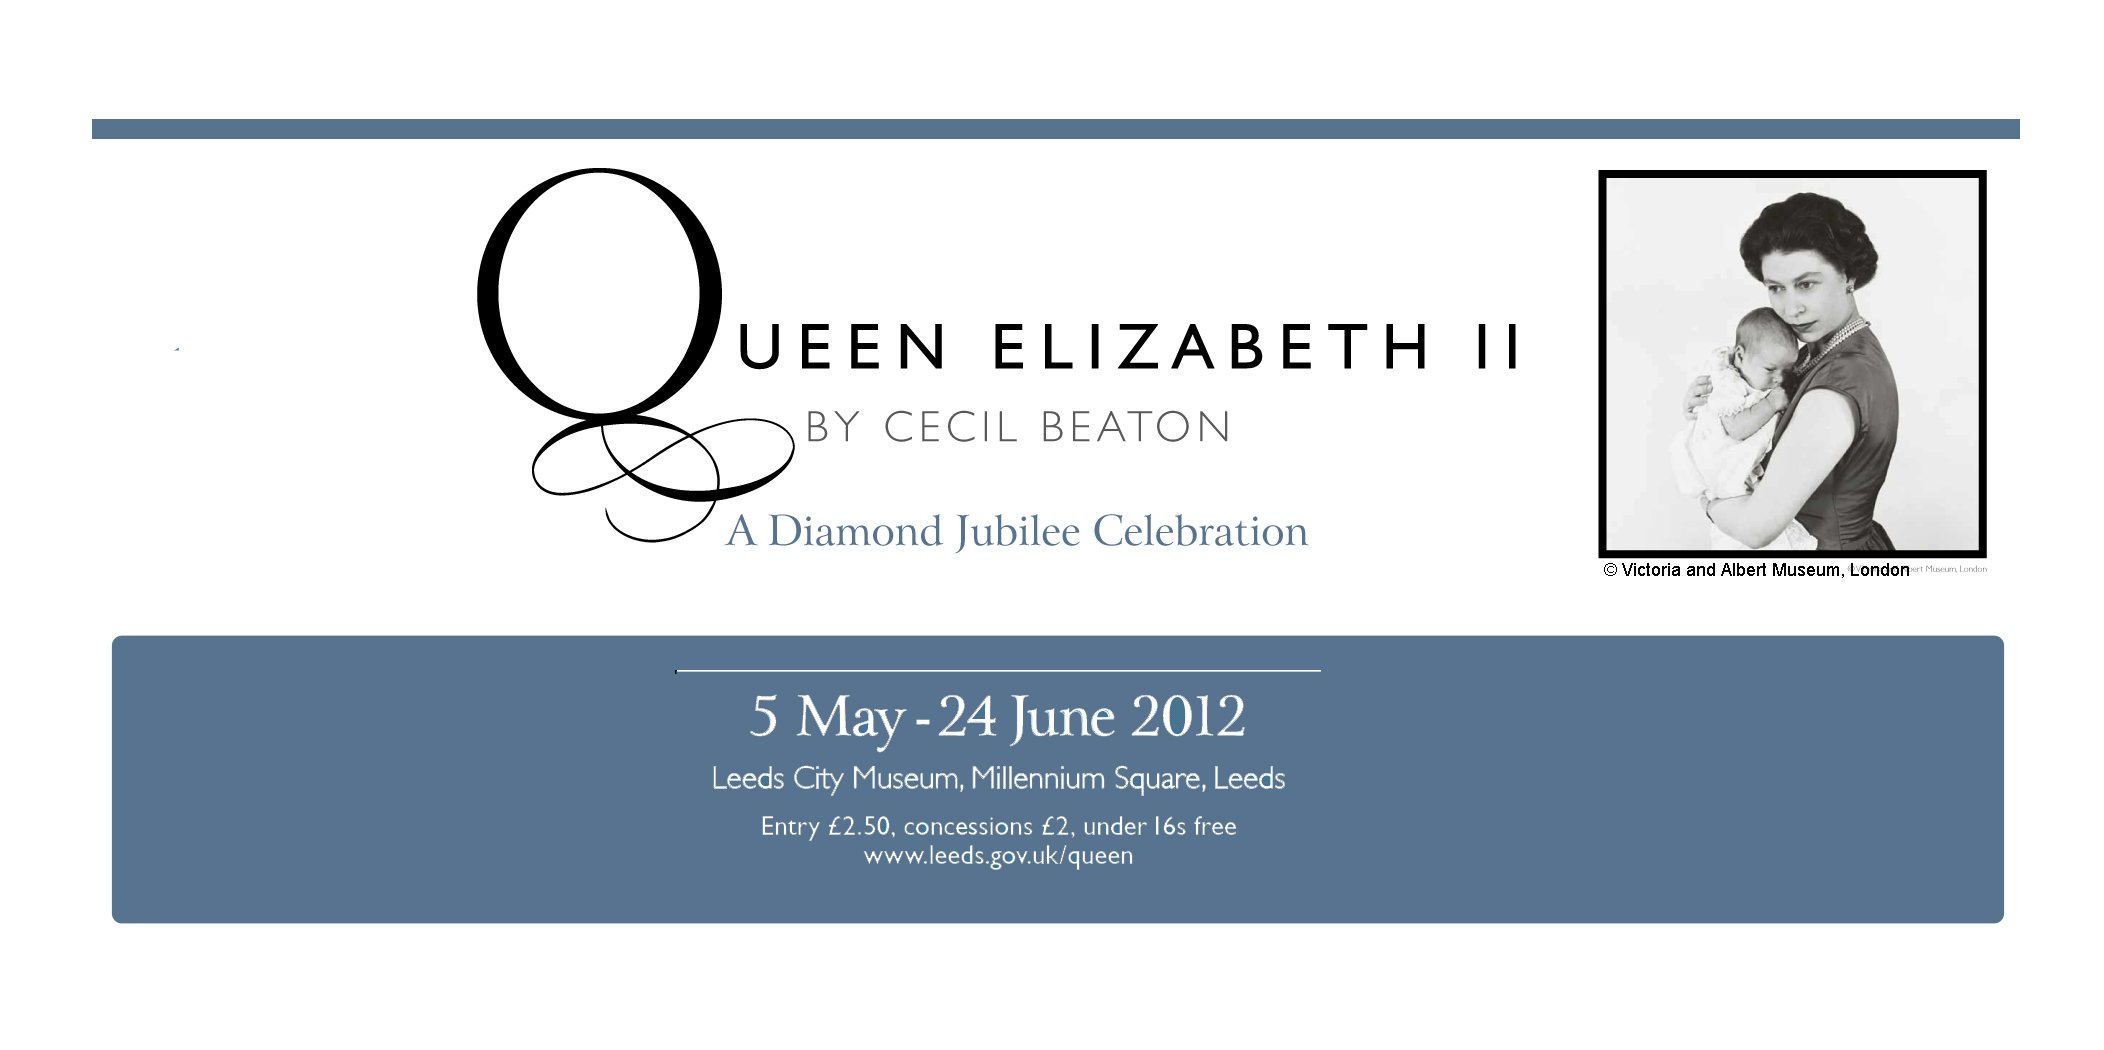 Queen Elizabeth II by Cecil Beaton at Leeds City Museum